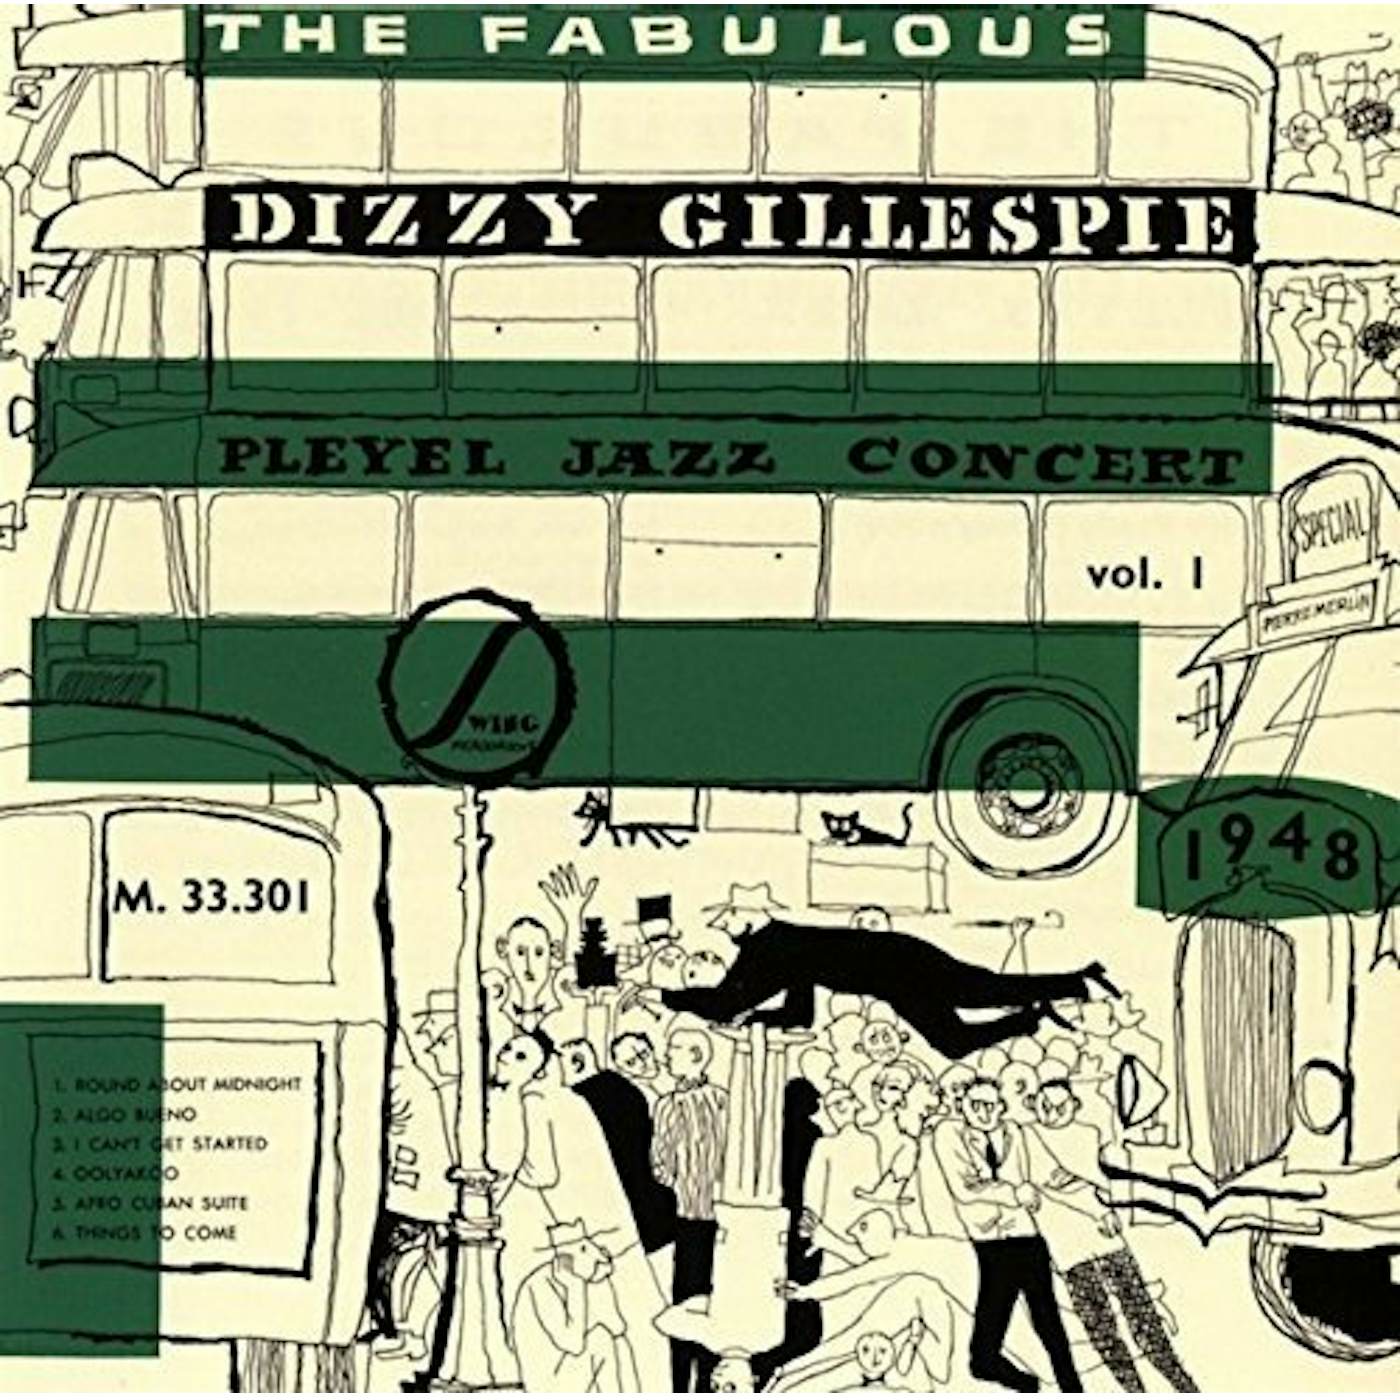 Dizzy Gillespie PLEYEL JAZZ CONCERT 1948 Vinyl Record